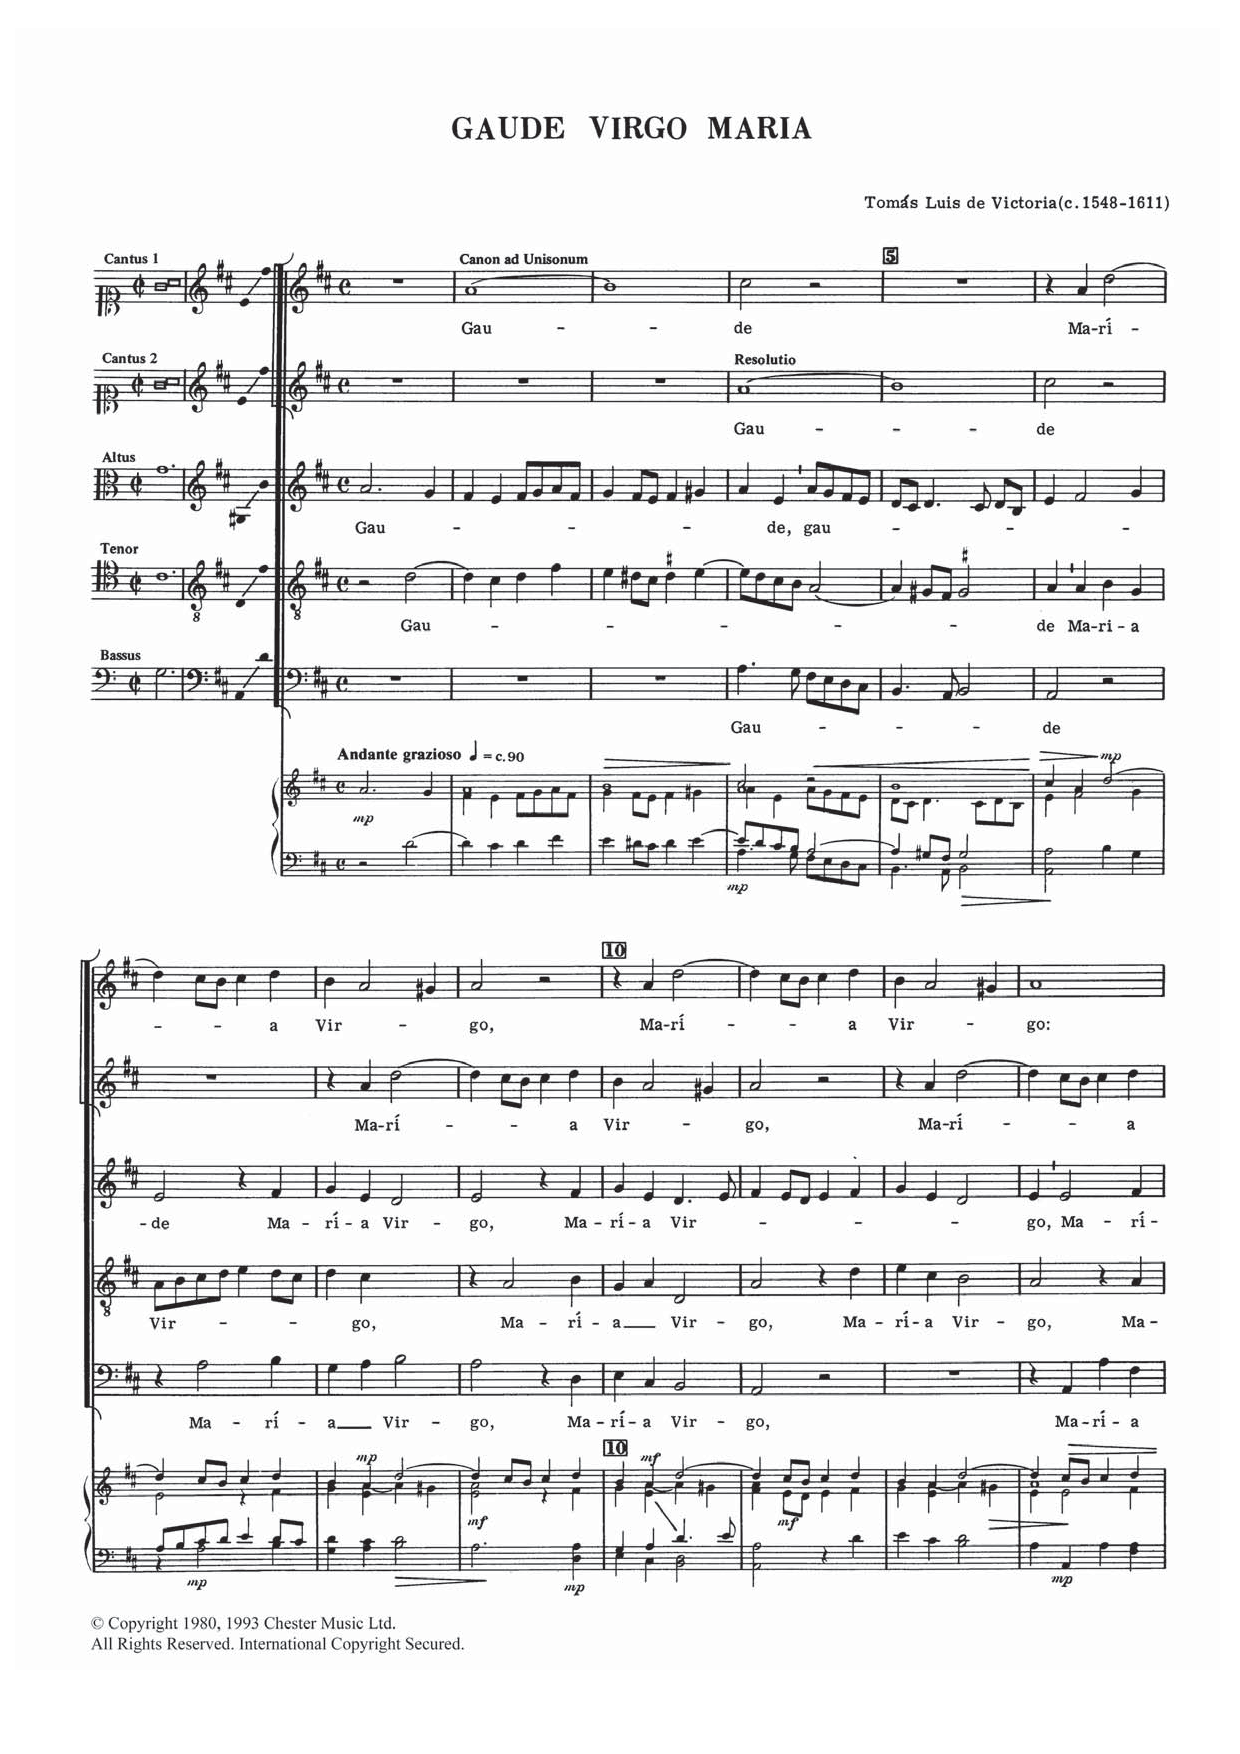 Tomàs Luis de Victoria Gaude Virgo Maria Sheet Music Notes & Chords for Choral SSATB - Download or Print PDF